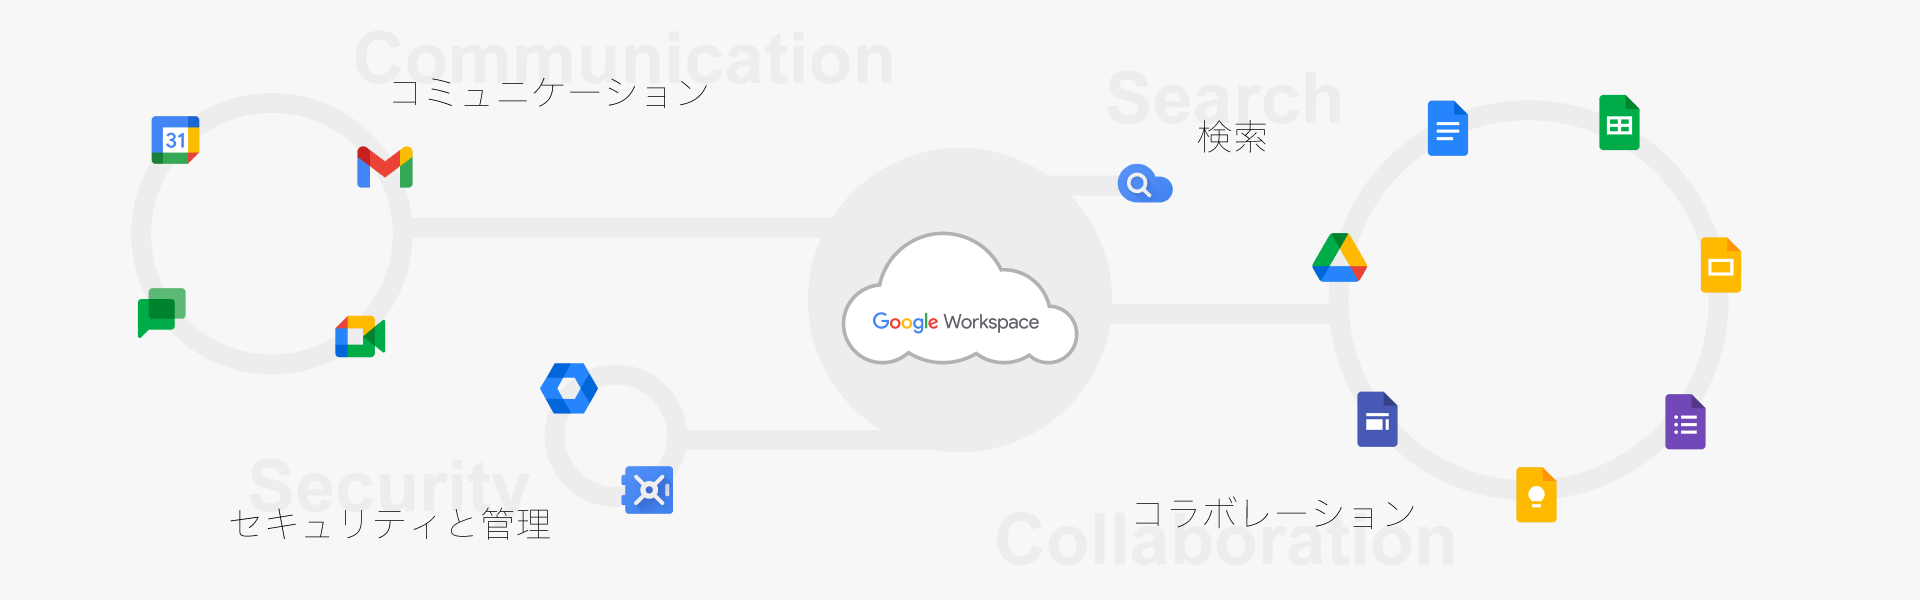 Google Workspace とは